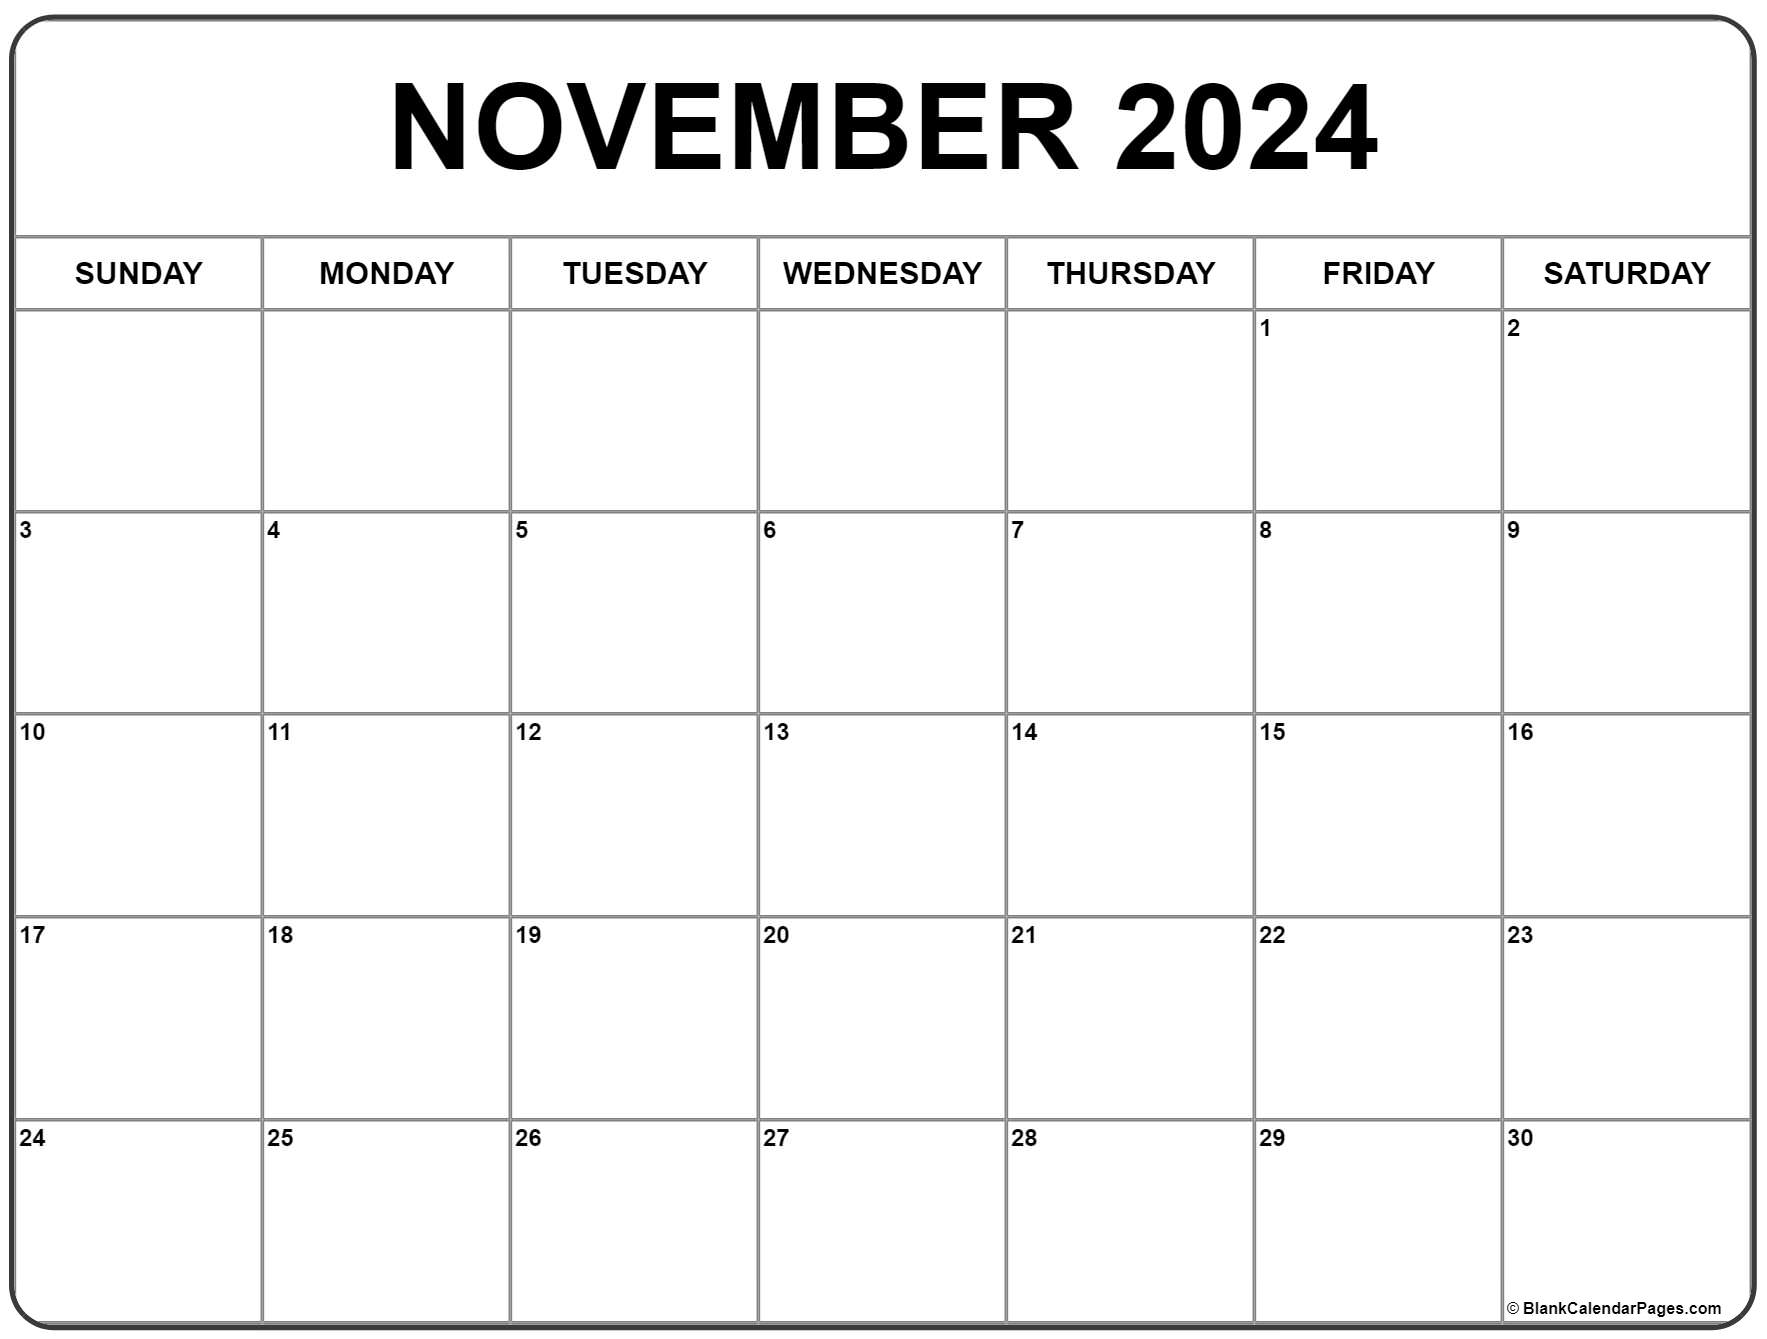 September October November 2022 Calendar November 2022 Calendar | Free Printable Calendar Templates